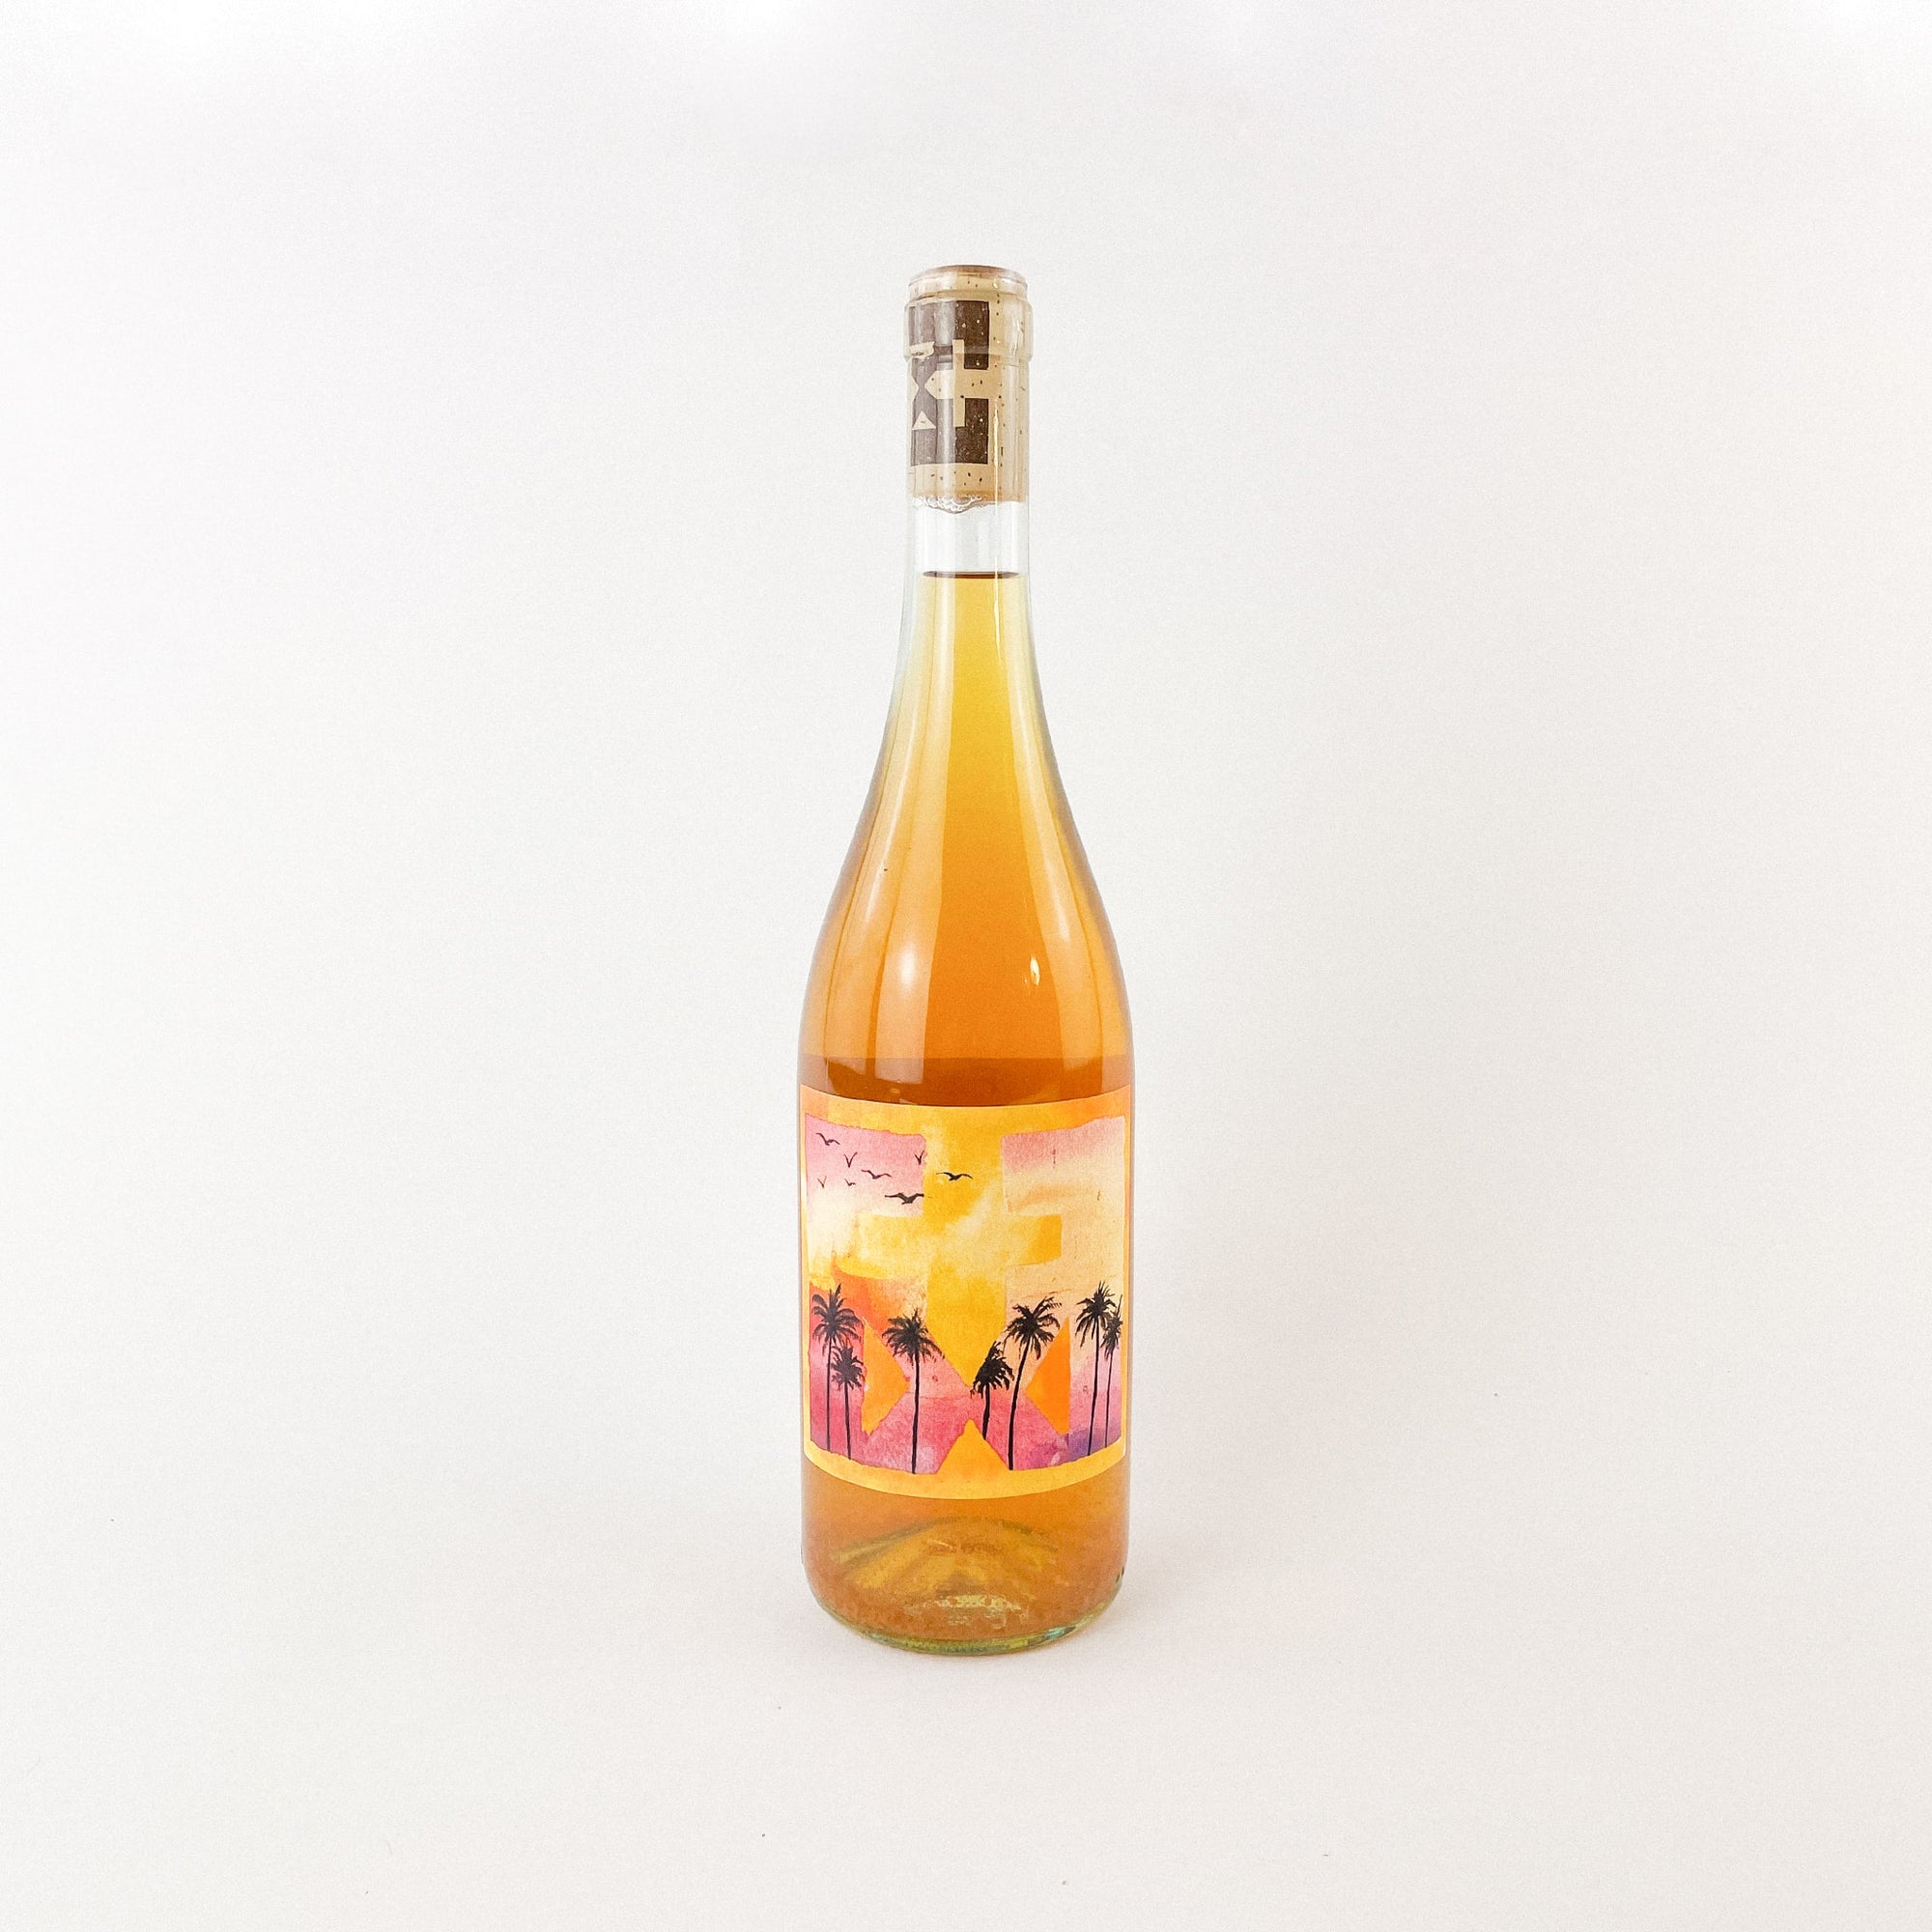 Bottle of Tenuta Nardone Giardino FXF Bianco natural orange wine front view